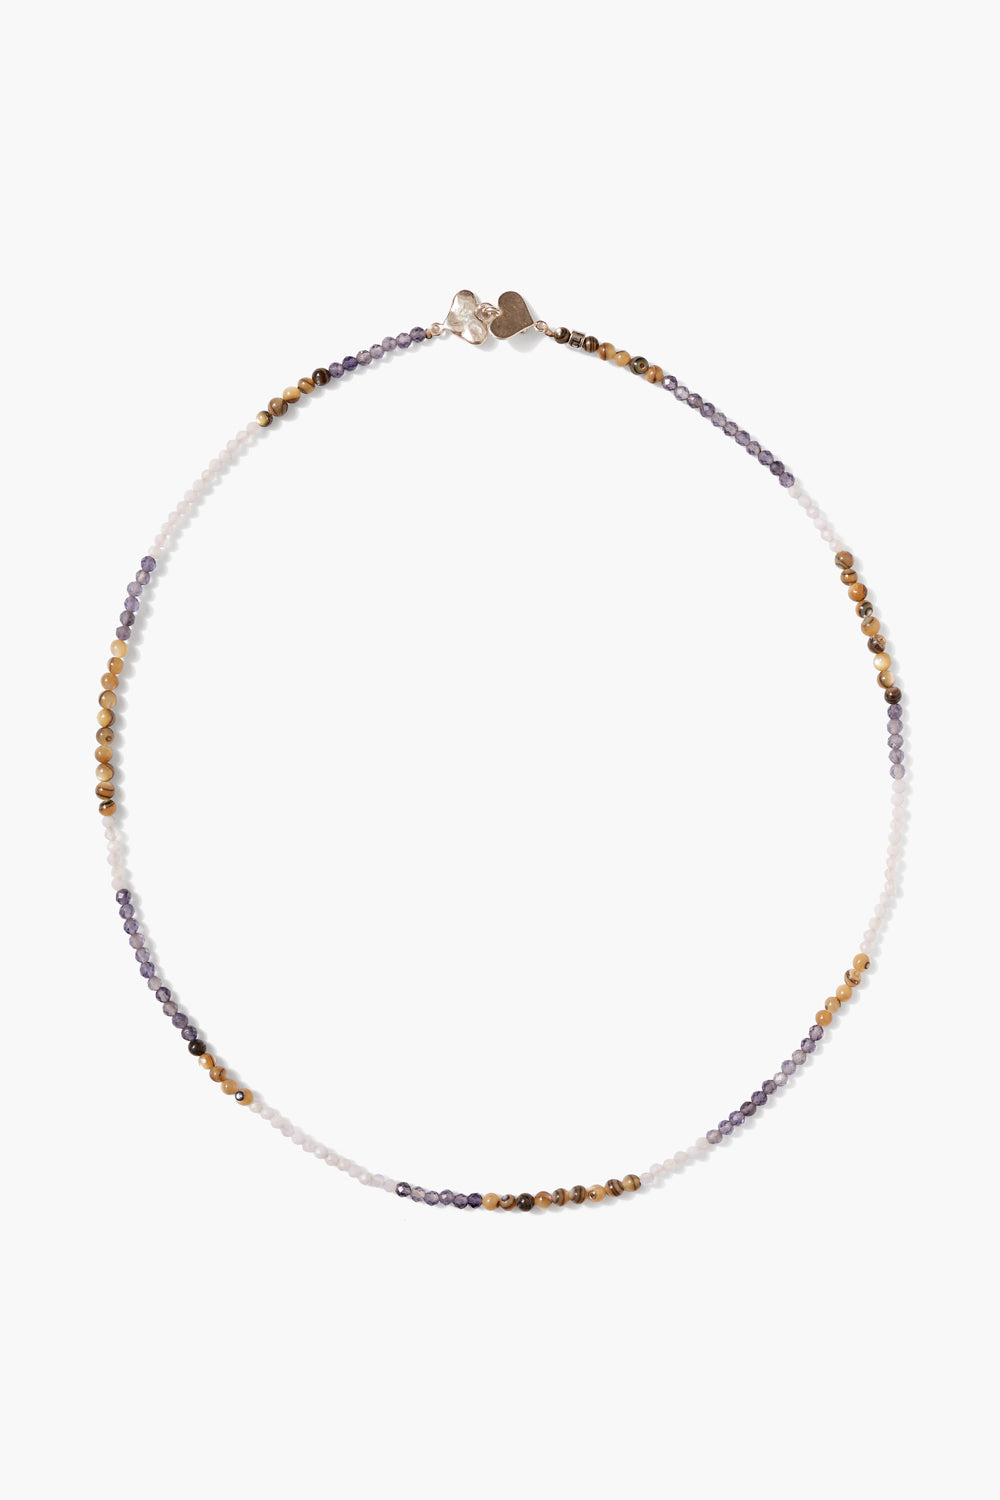 Chan Luu Handmade Necklaces - Unique Necklaces and Pendants – Page 3